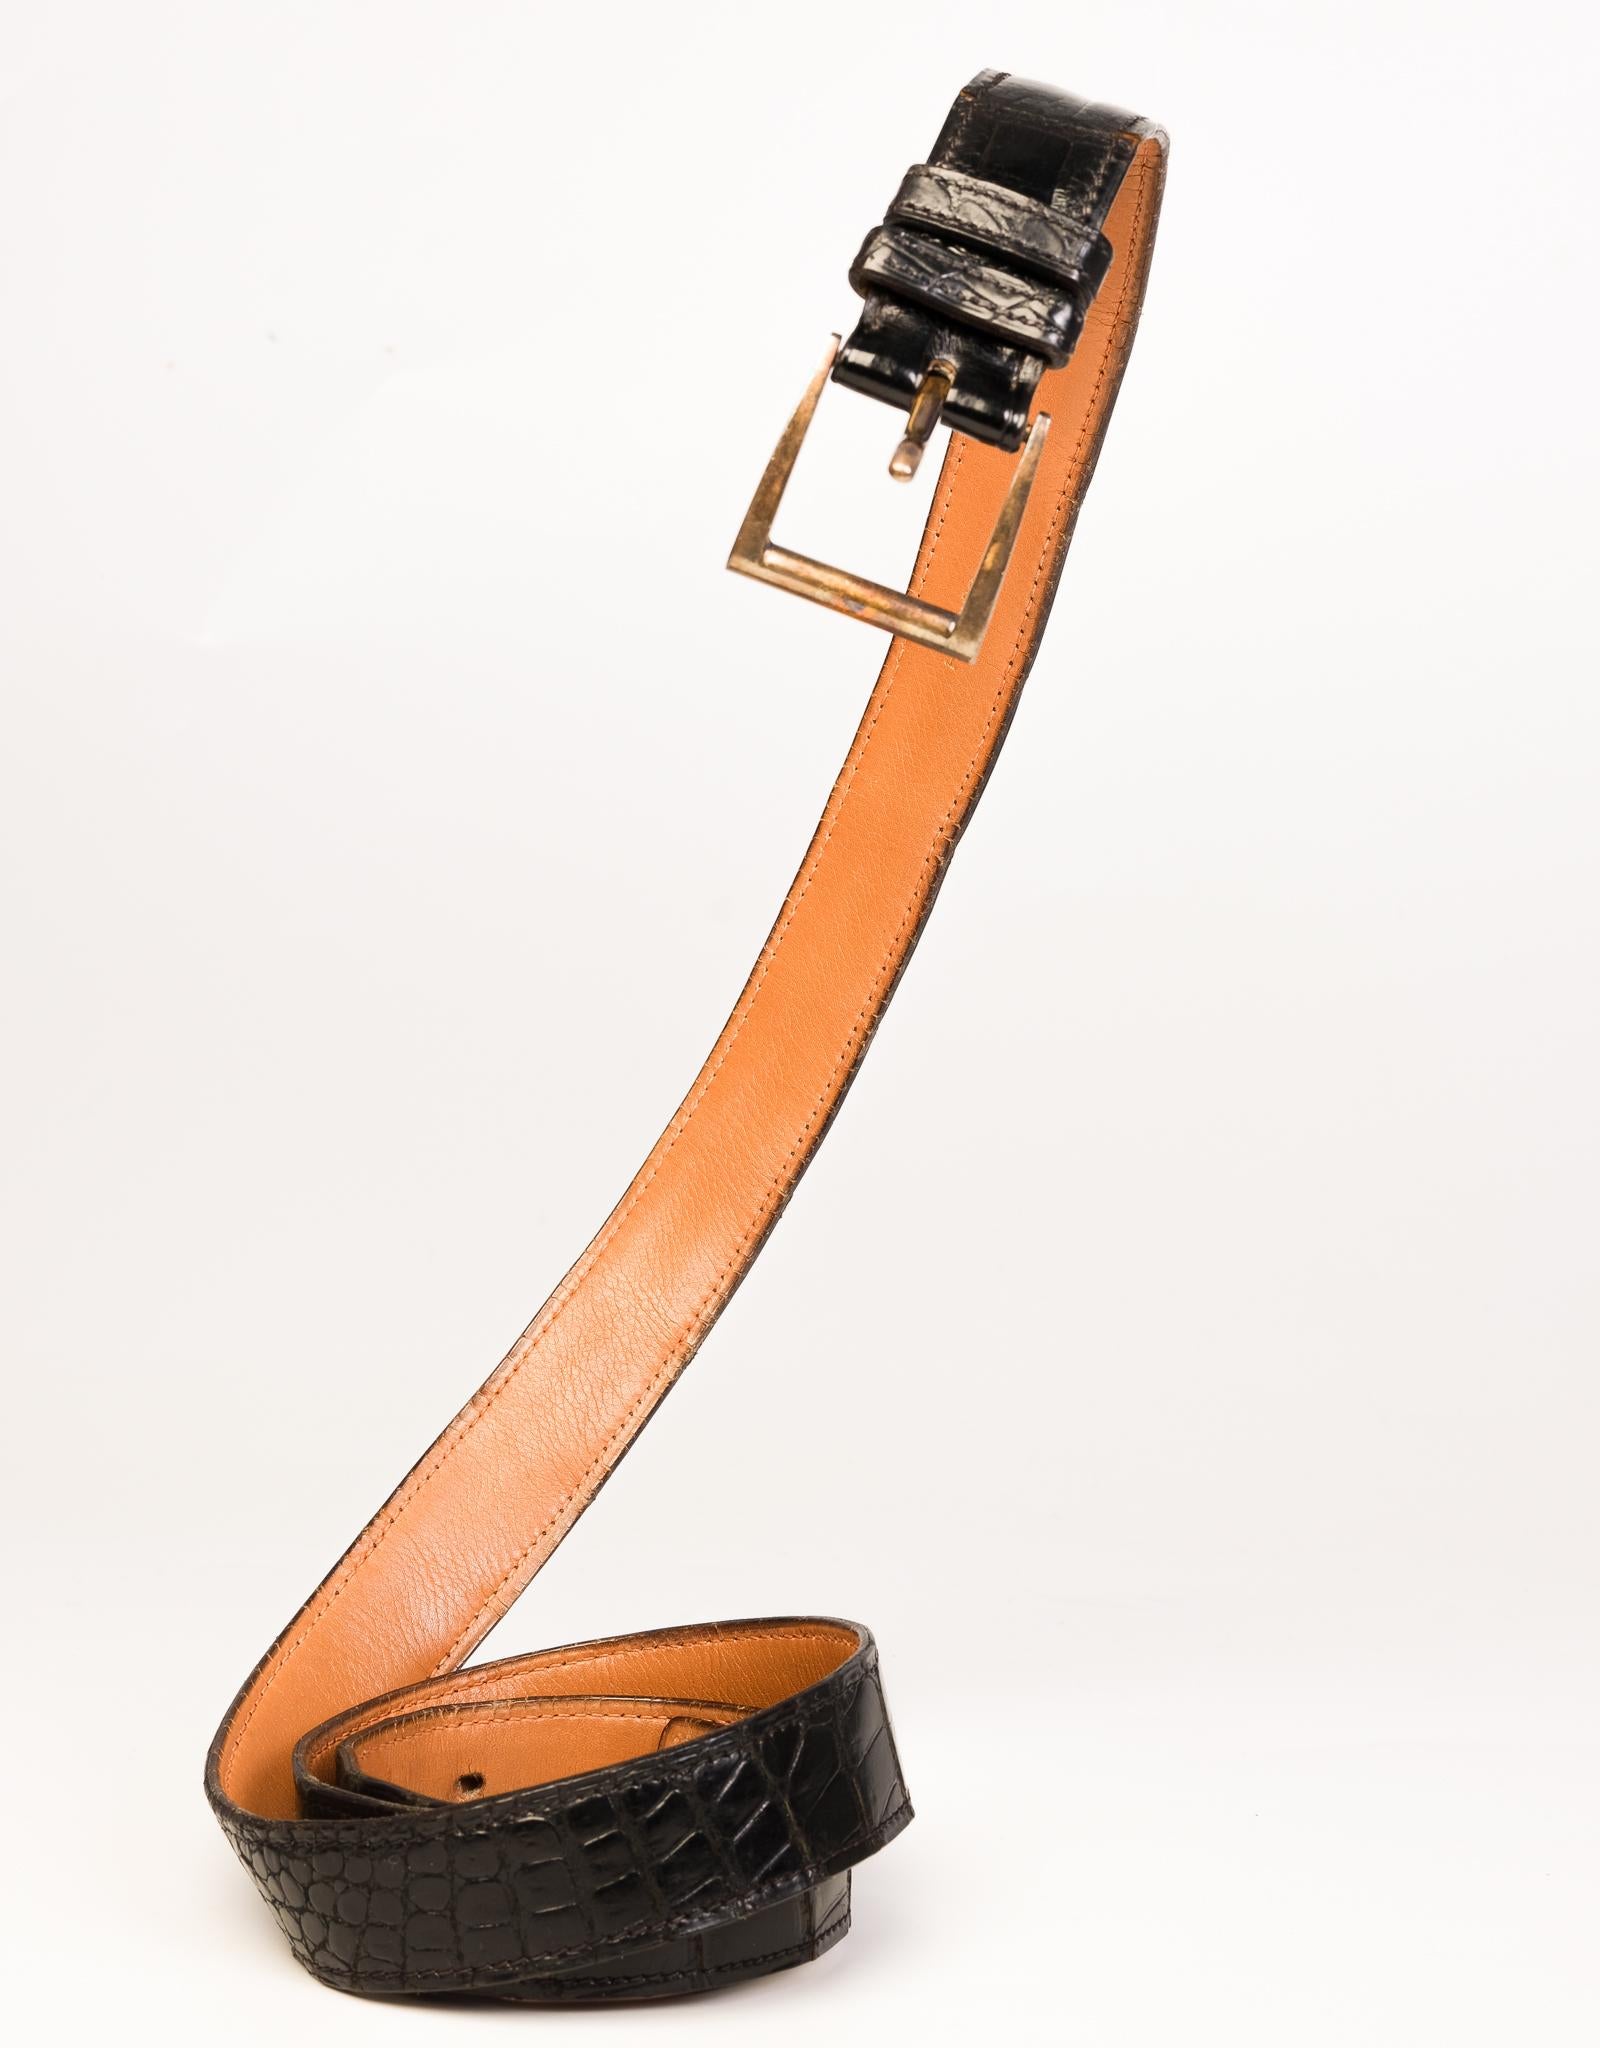 Black crocodile leather vintage Hermes belt with gold-tone buckle. 

COLOR: Black
MATERIAL: Leather
MEASURES: L 45